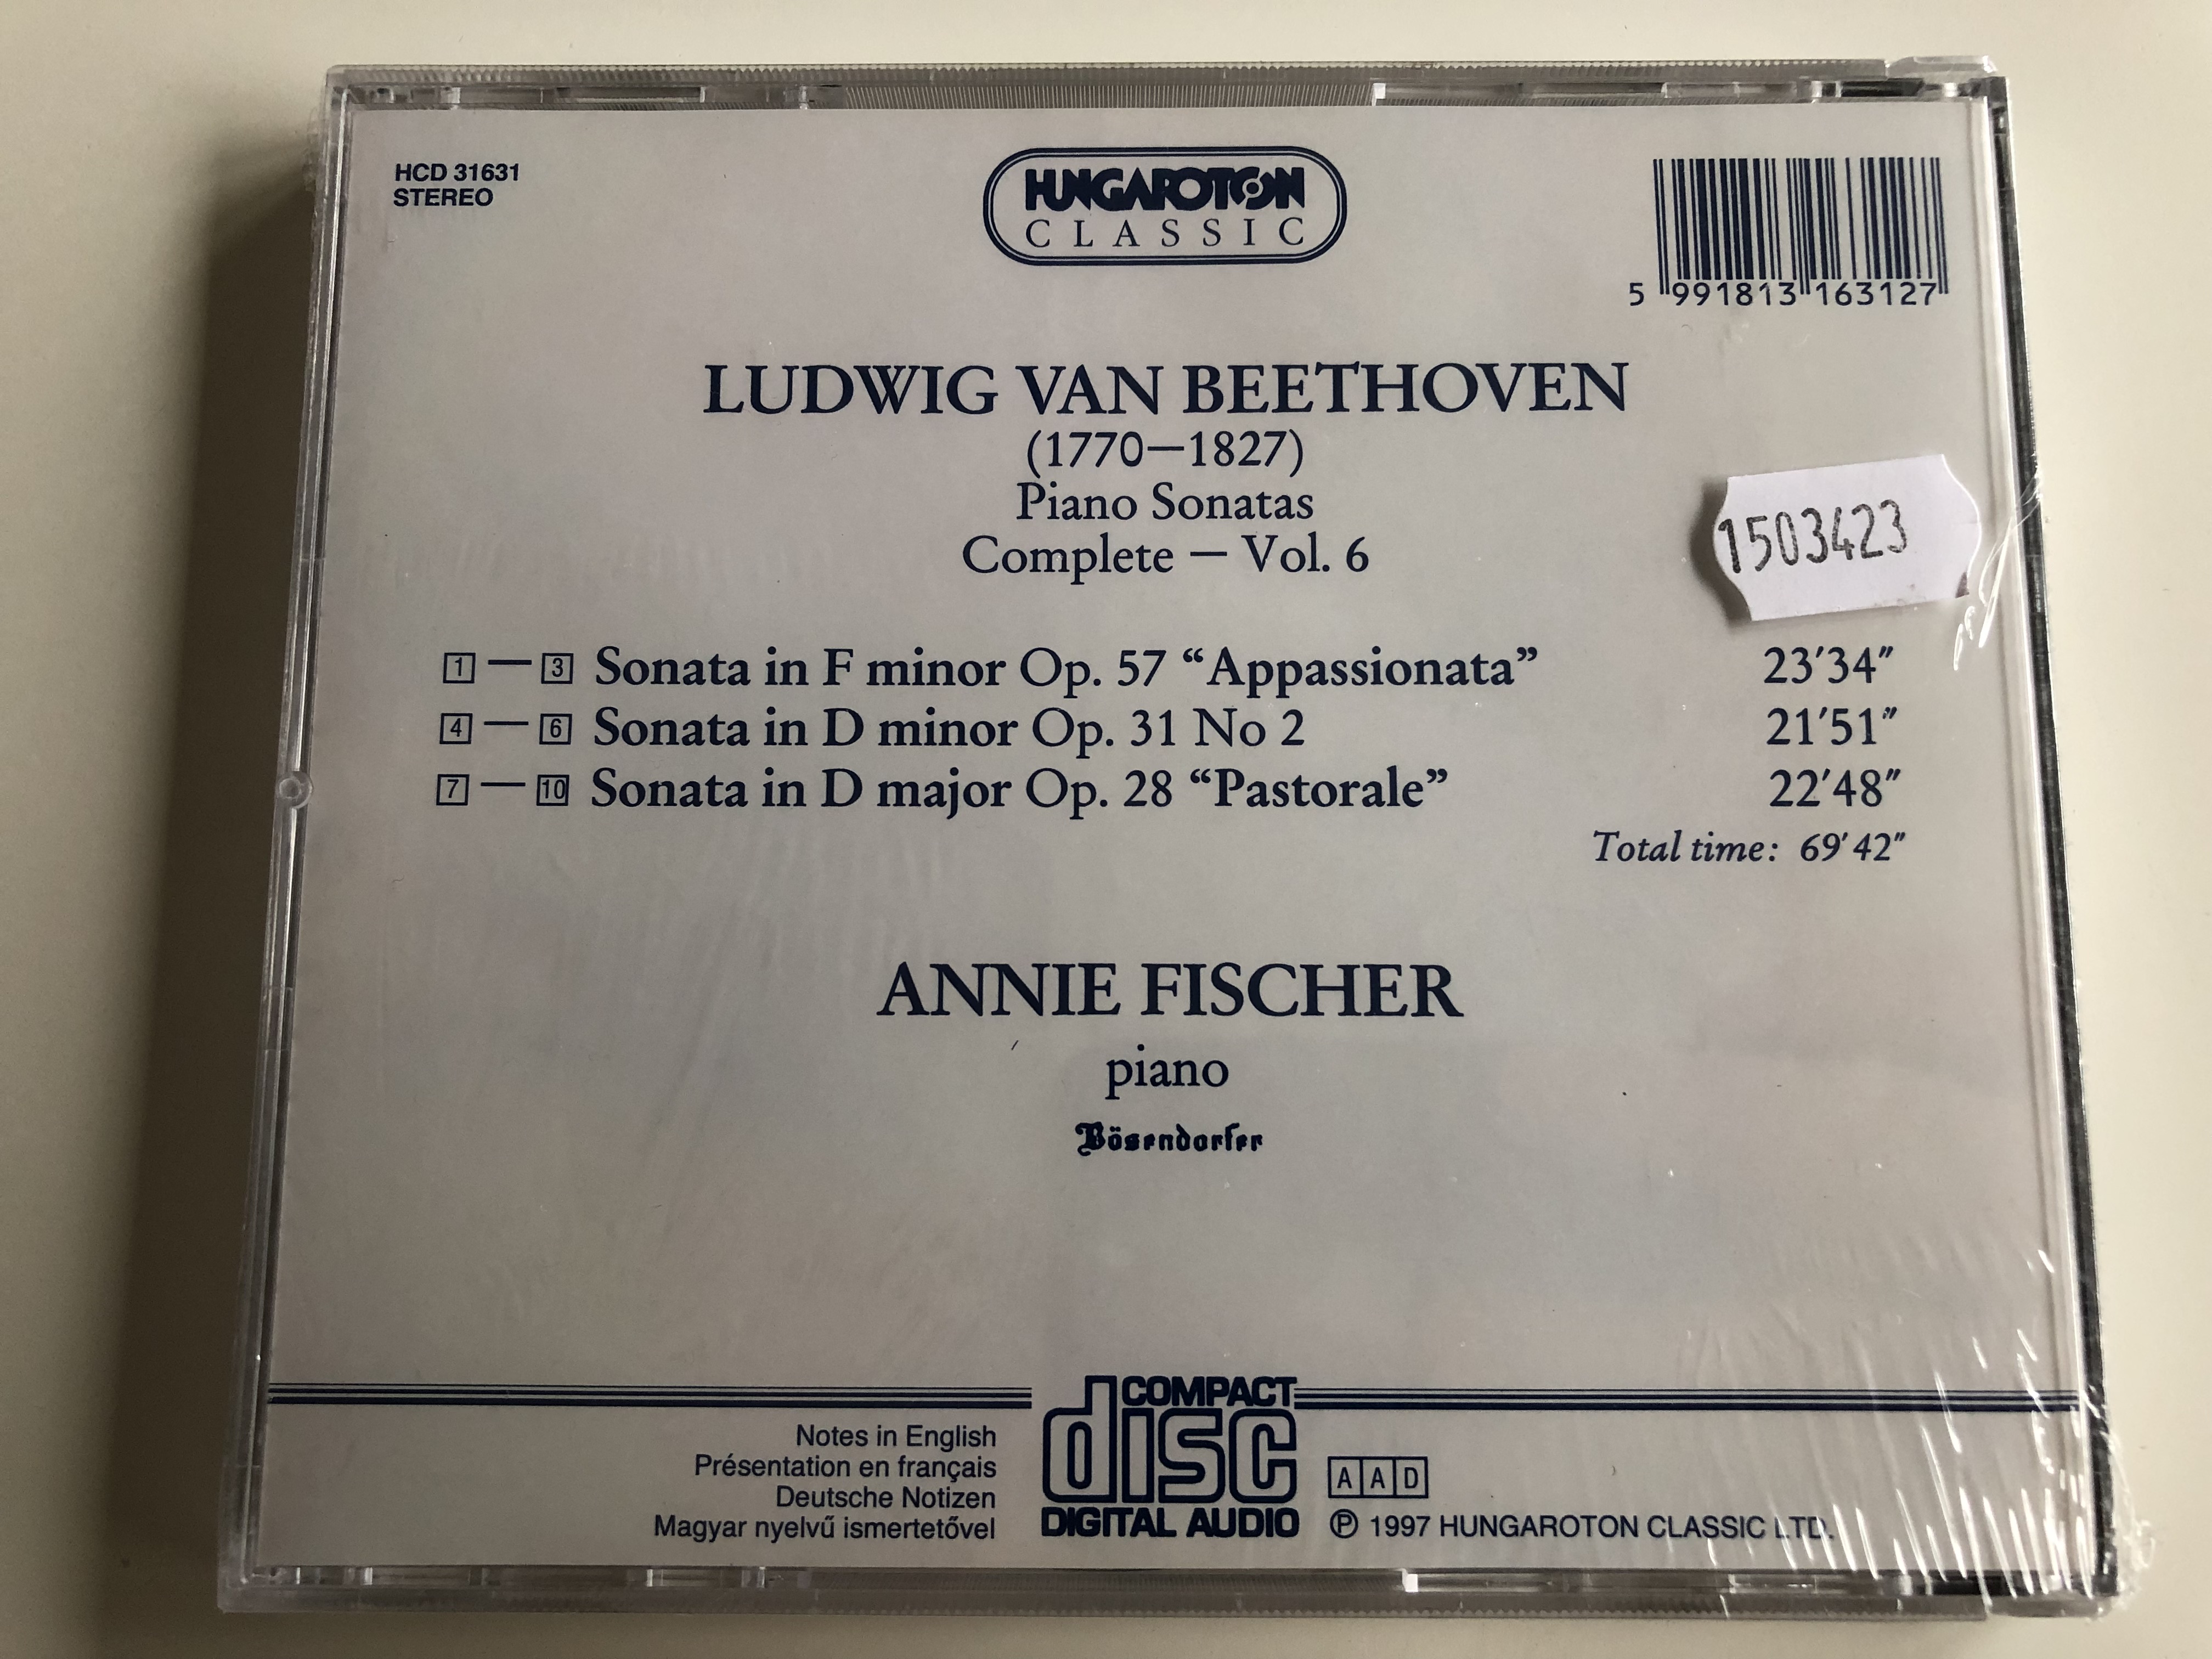 annie-fischer-ludwig-van-beethoven-piano-sonatas-complete-vol.-6-audio-cd-1997-hungaroton-classic-hcd-31631-2-.jpg